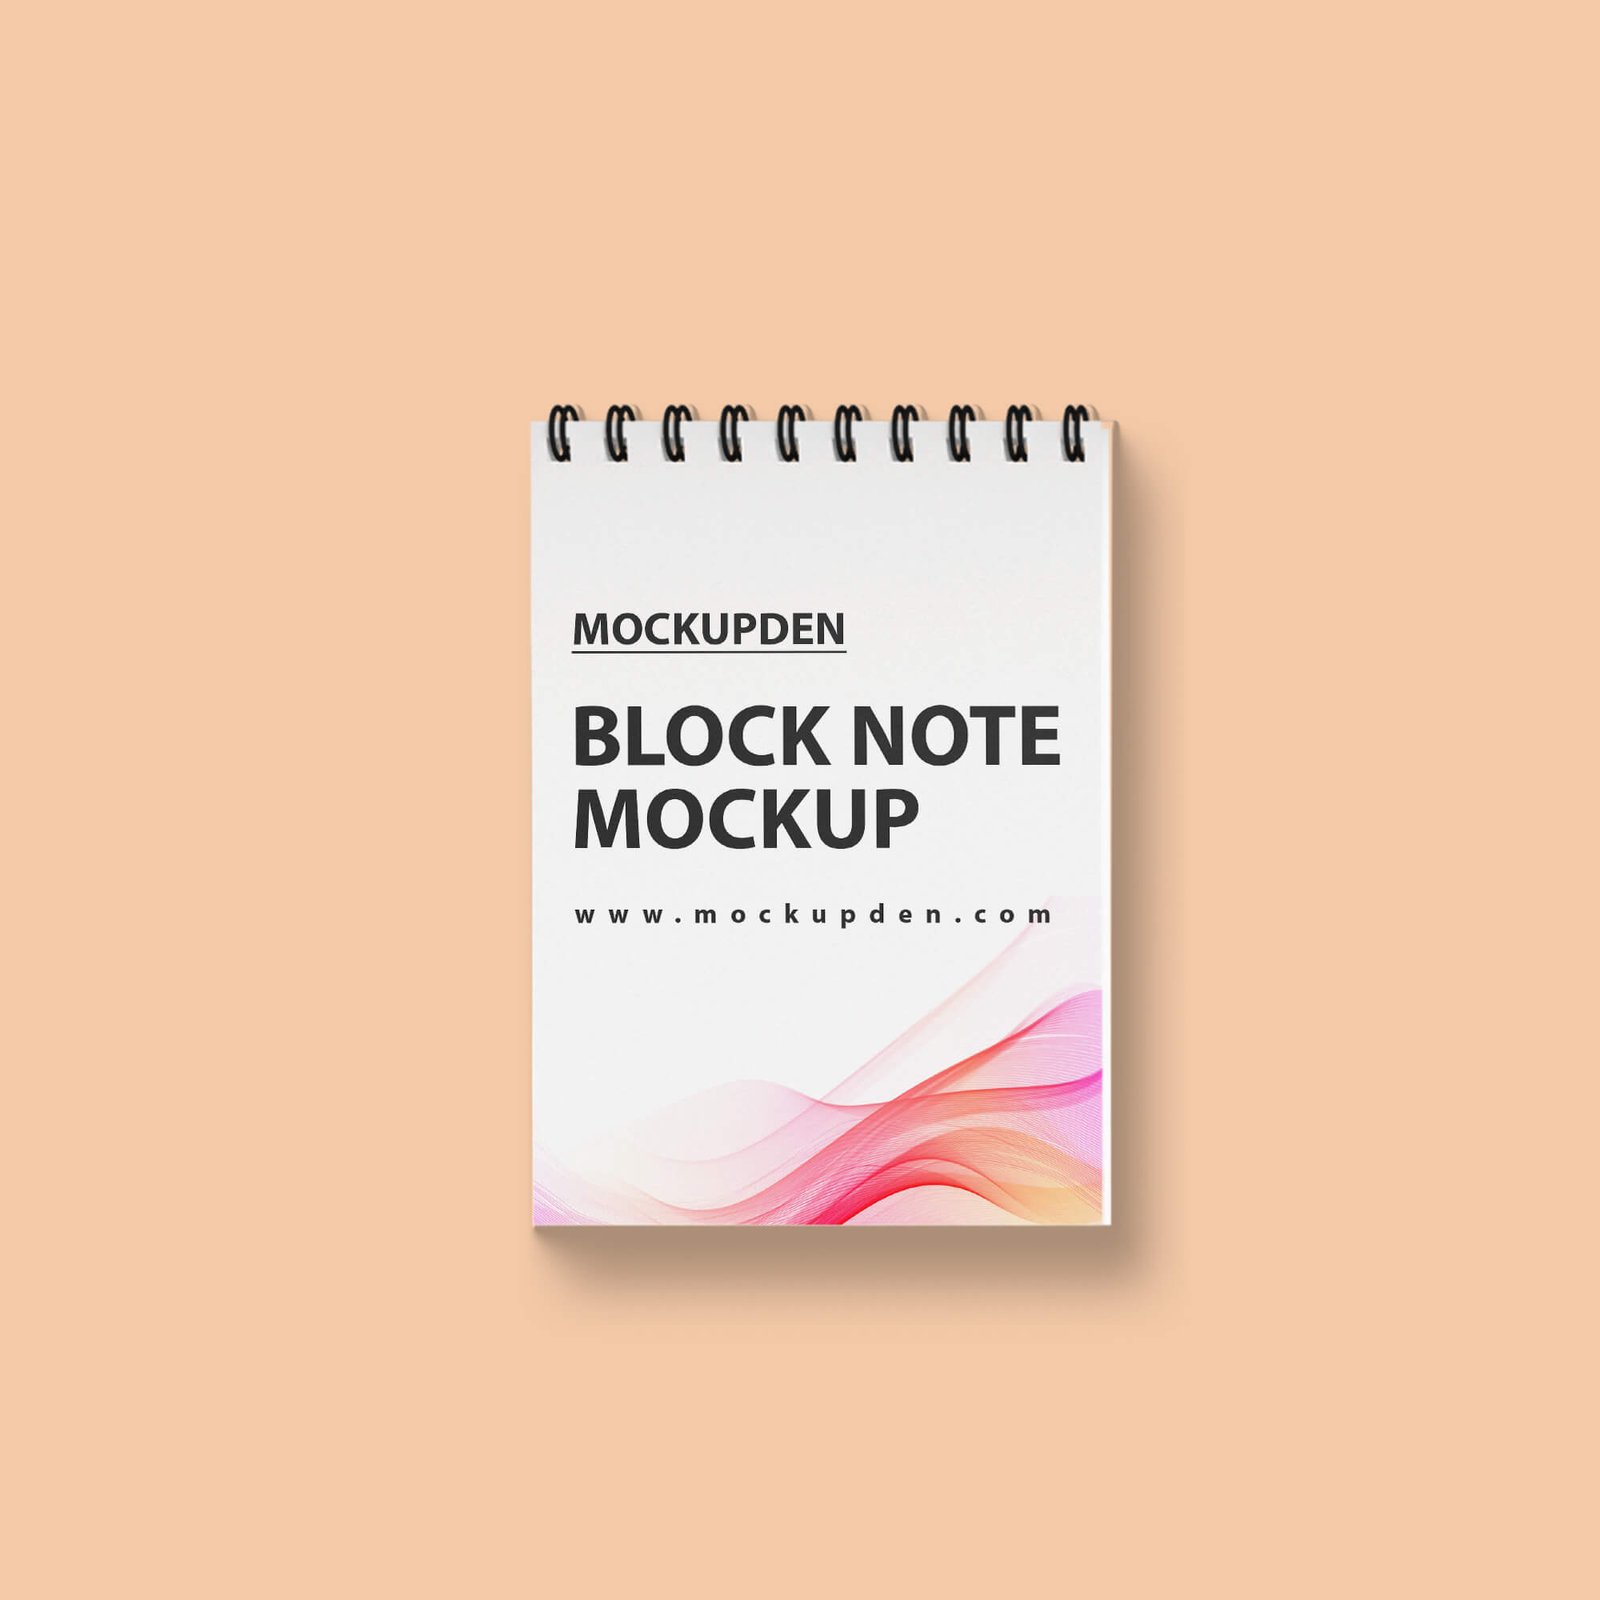 Design Free Block Note Mockup PSD Template